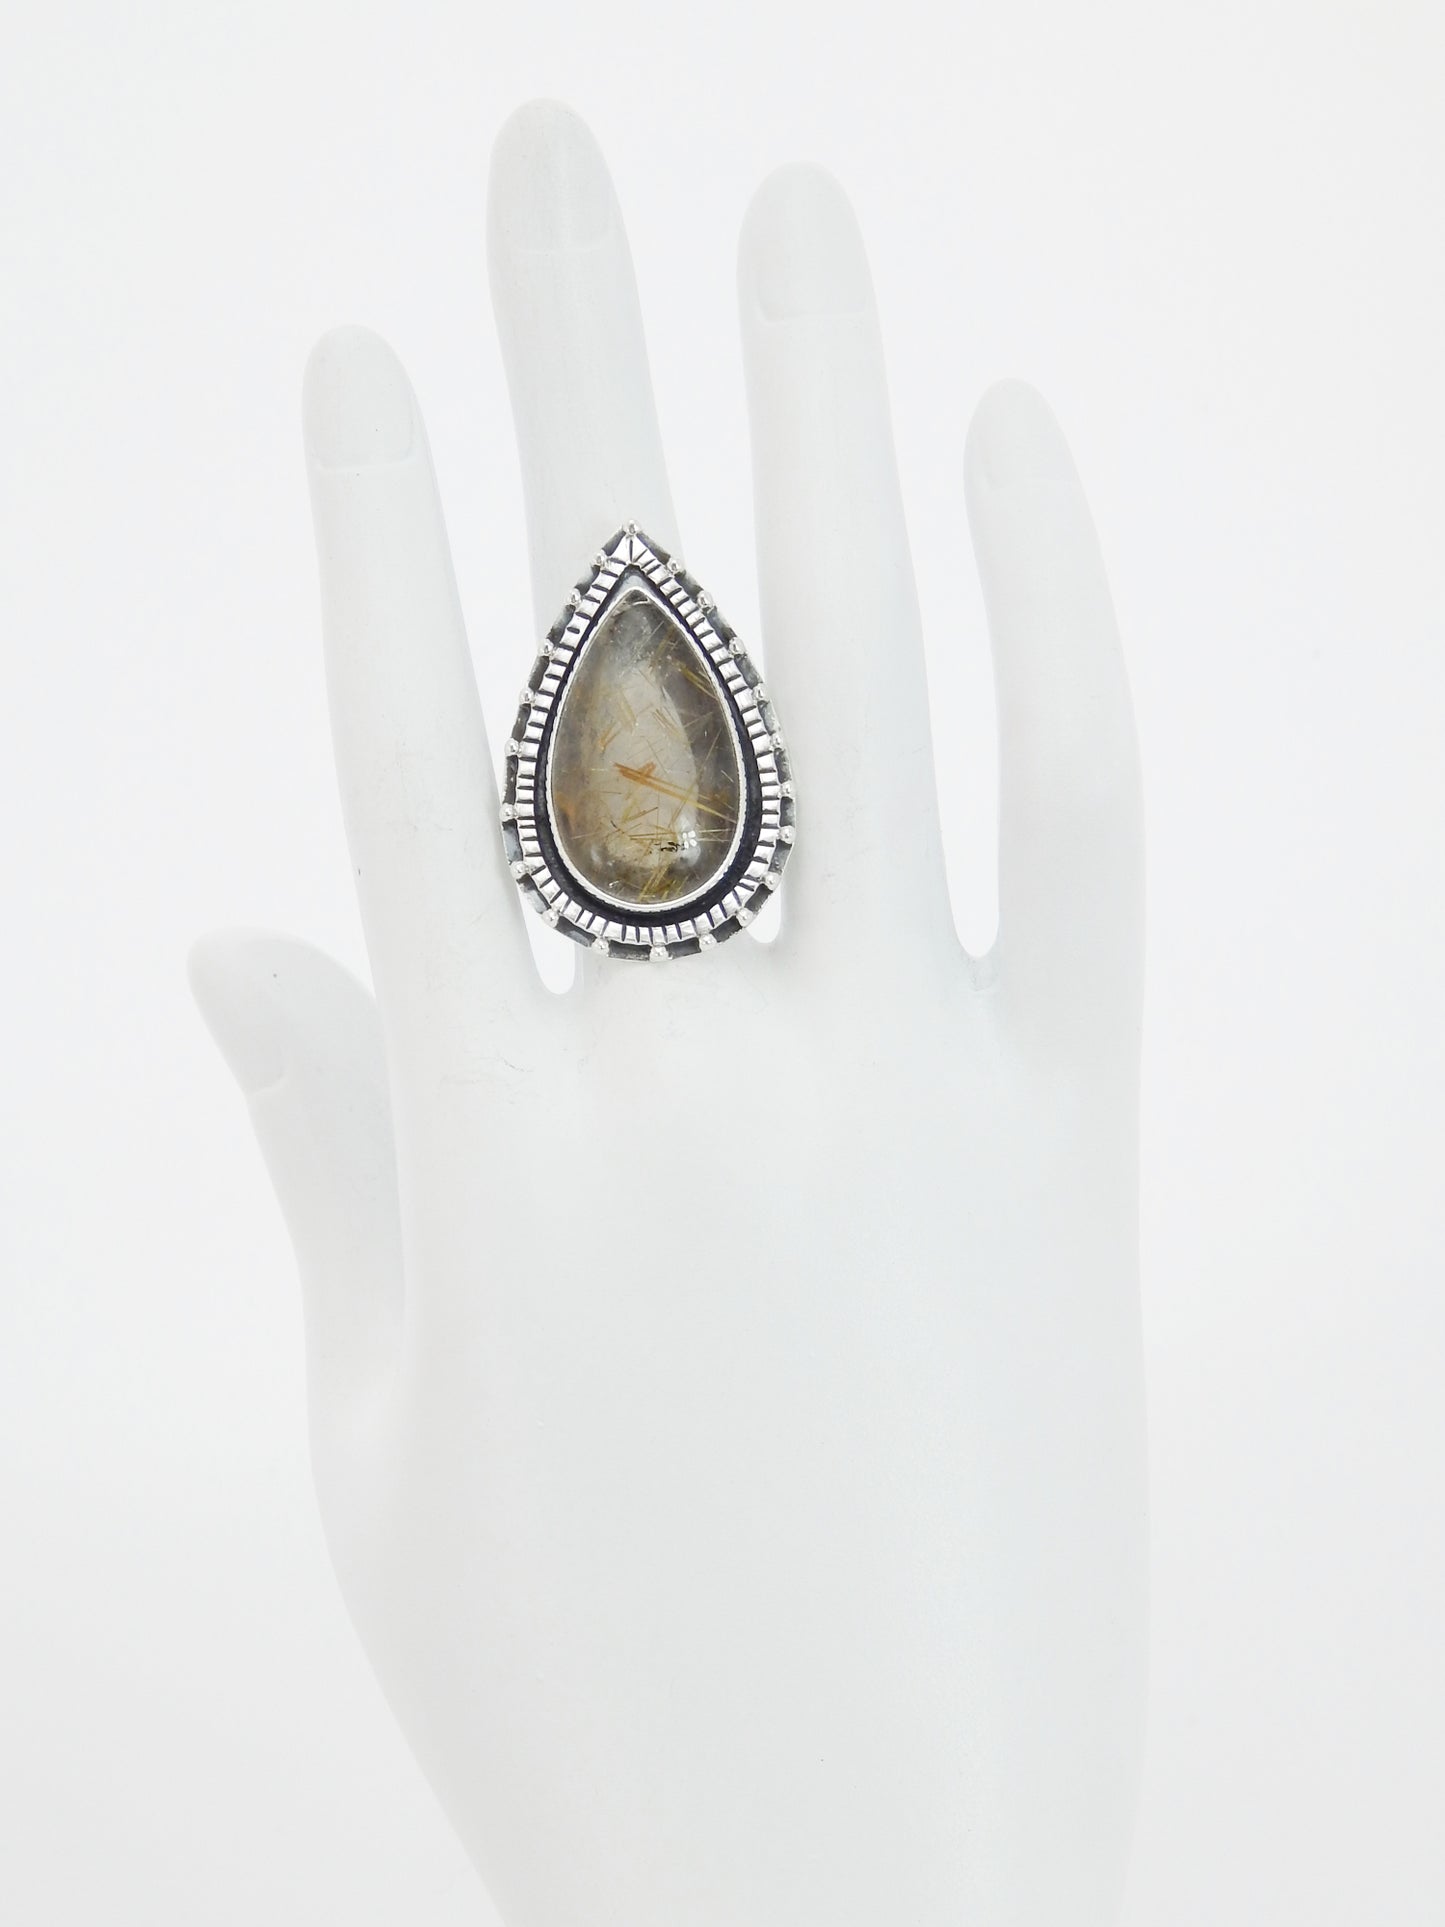 Genuine Gold Rutile Pear Cut Boho Ring in 925 Stelring Silver